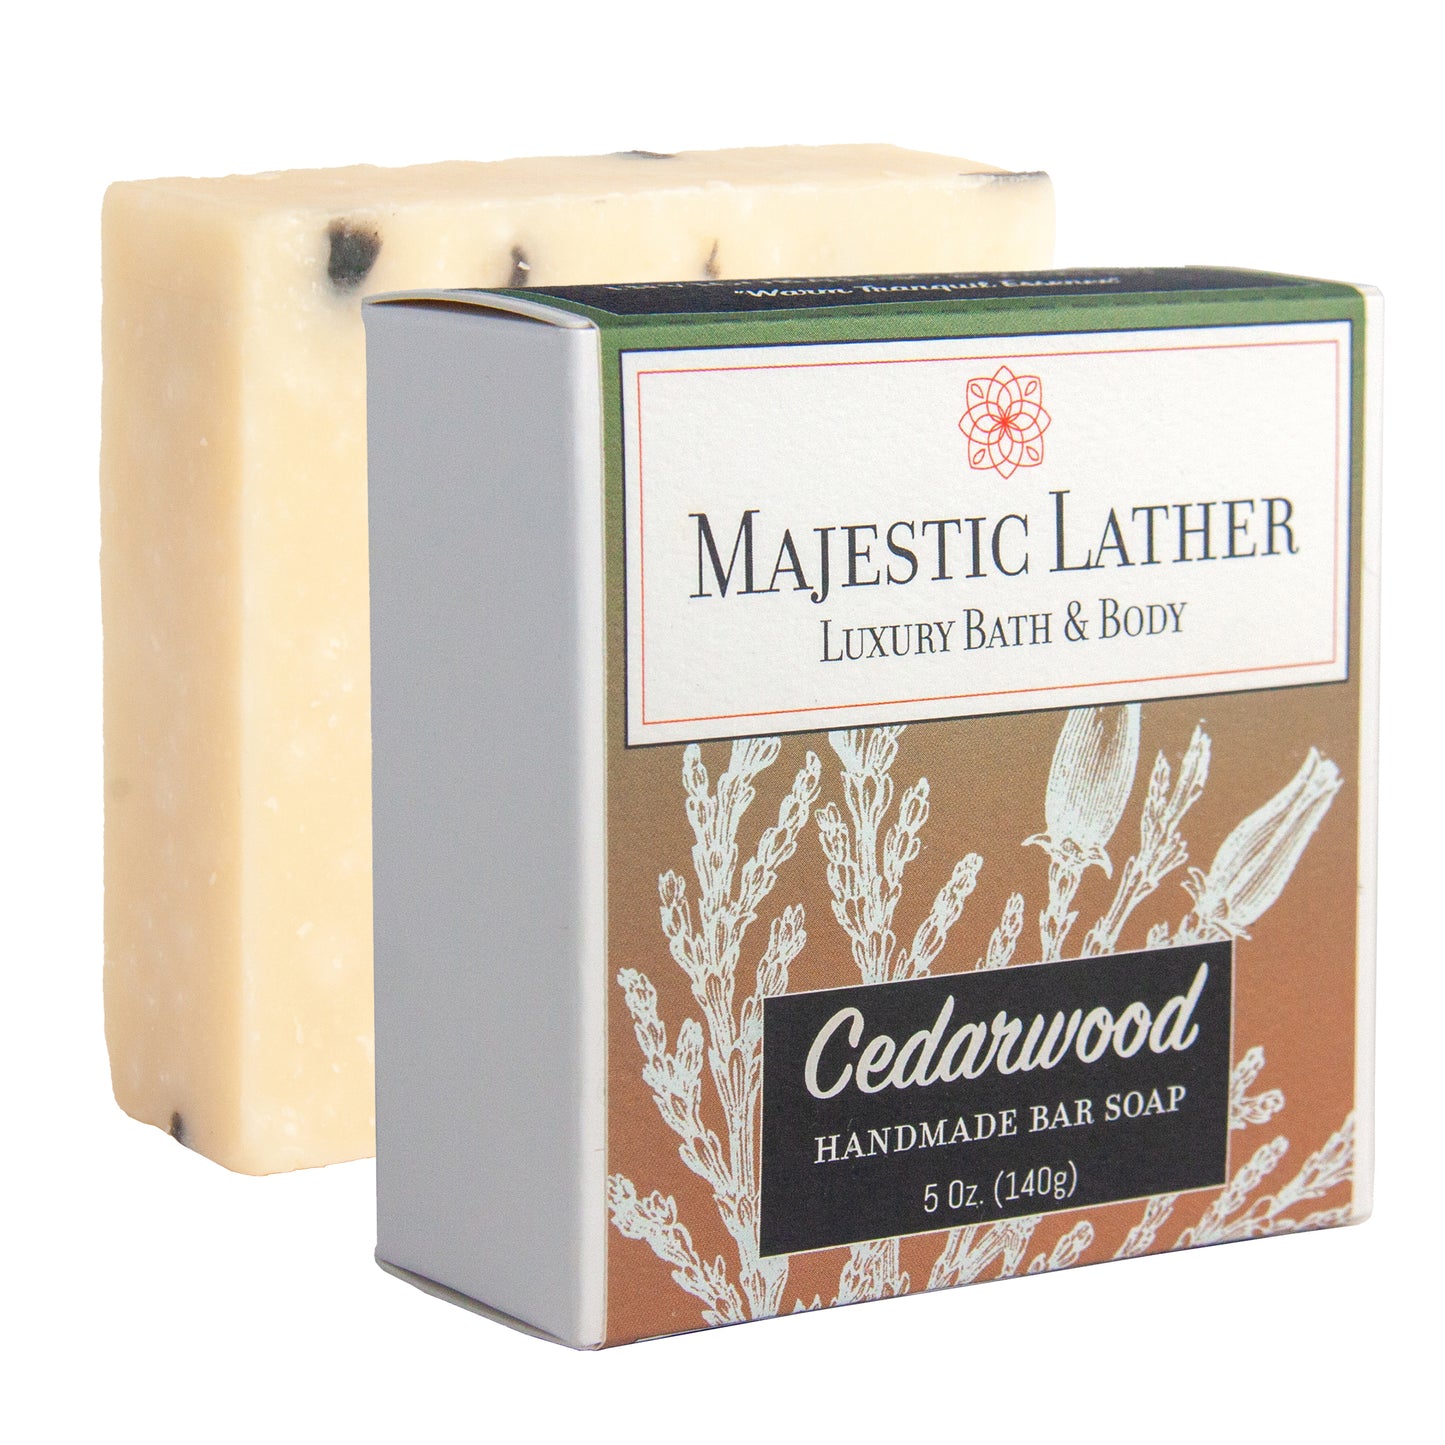 Majestic Lather Cedarwood Handmade Bar Soap & Box